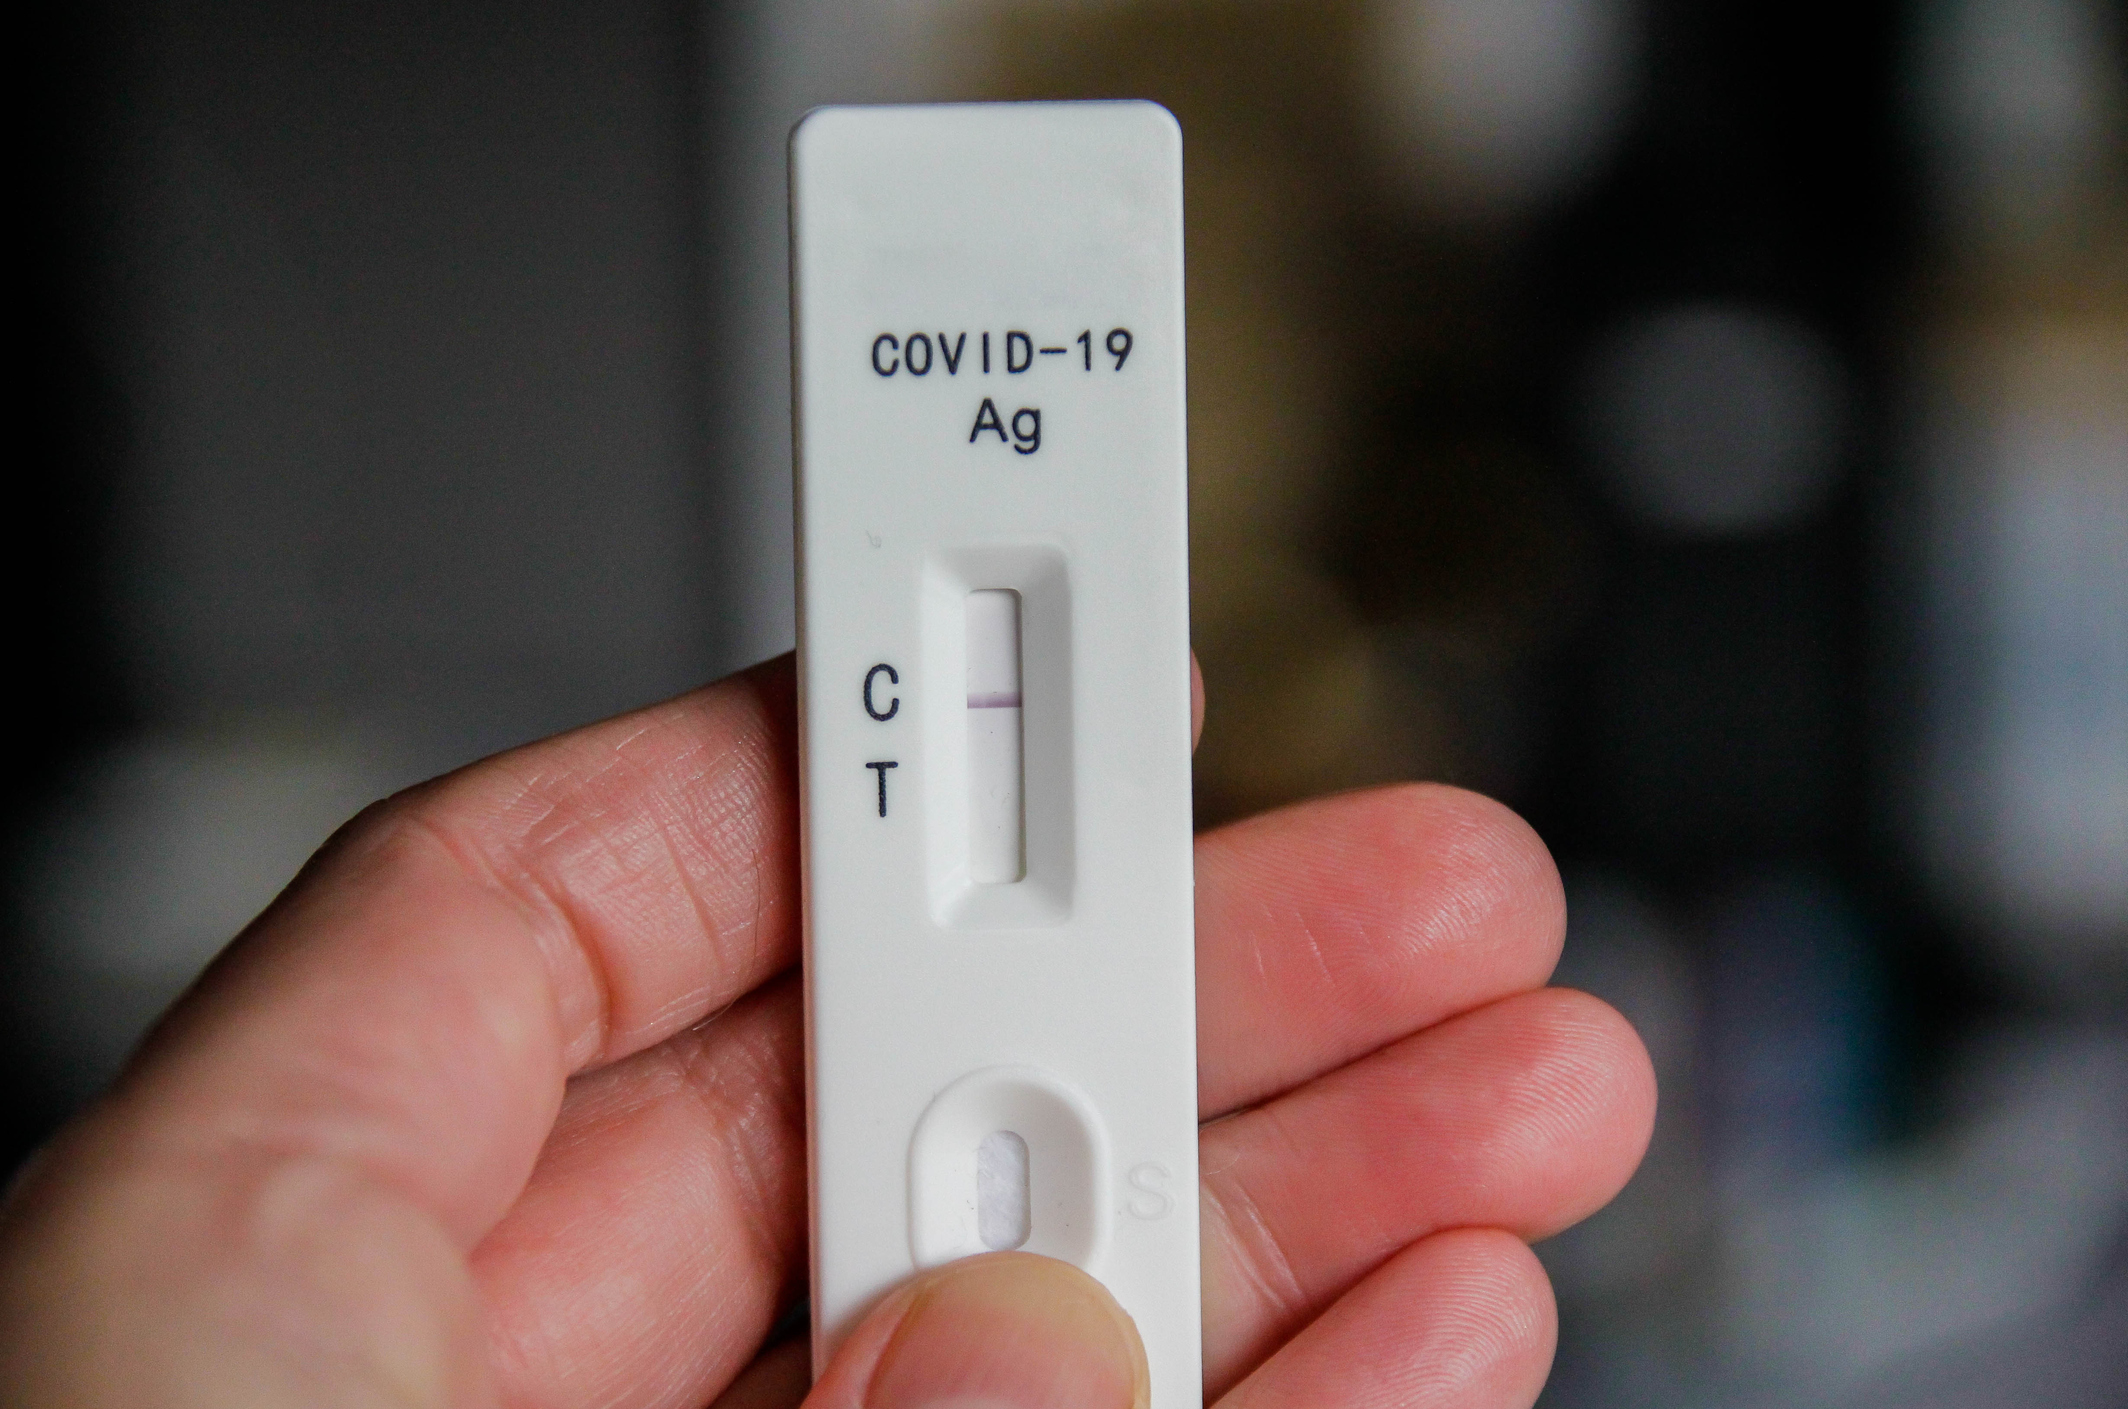 A negative COVID-19 antigen test